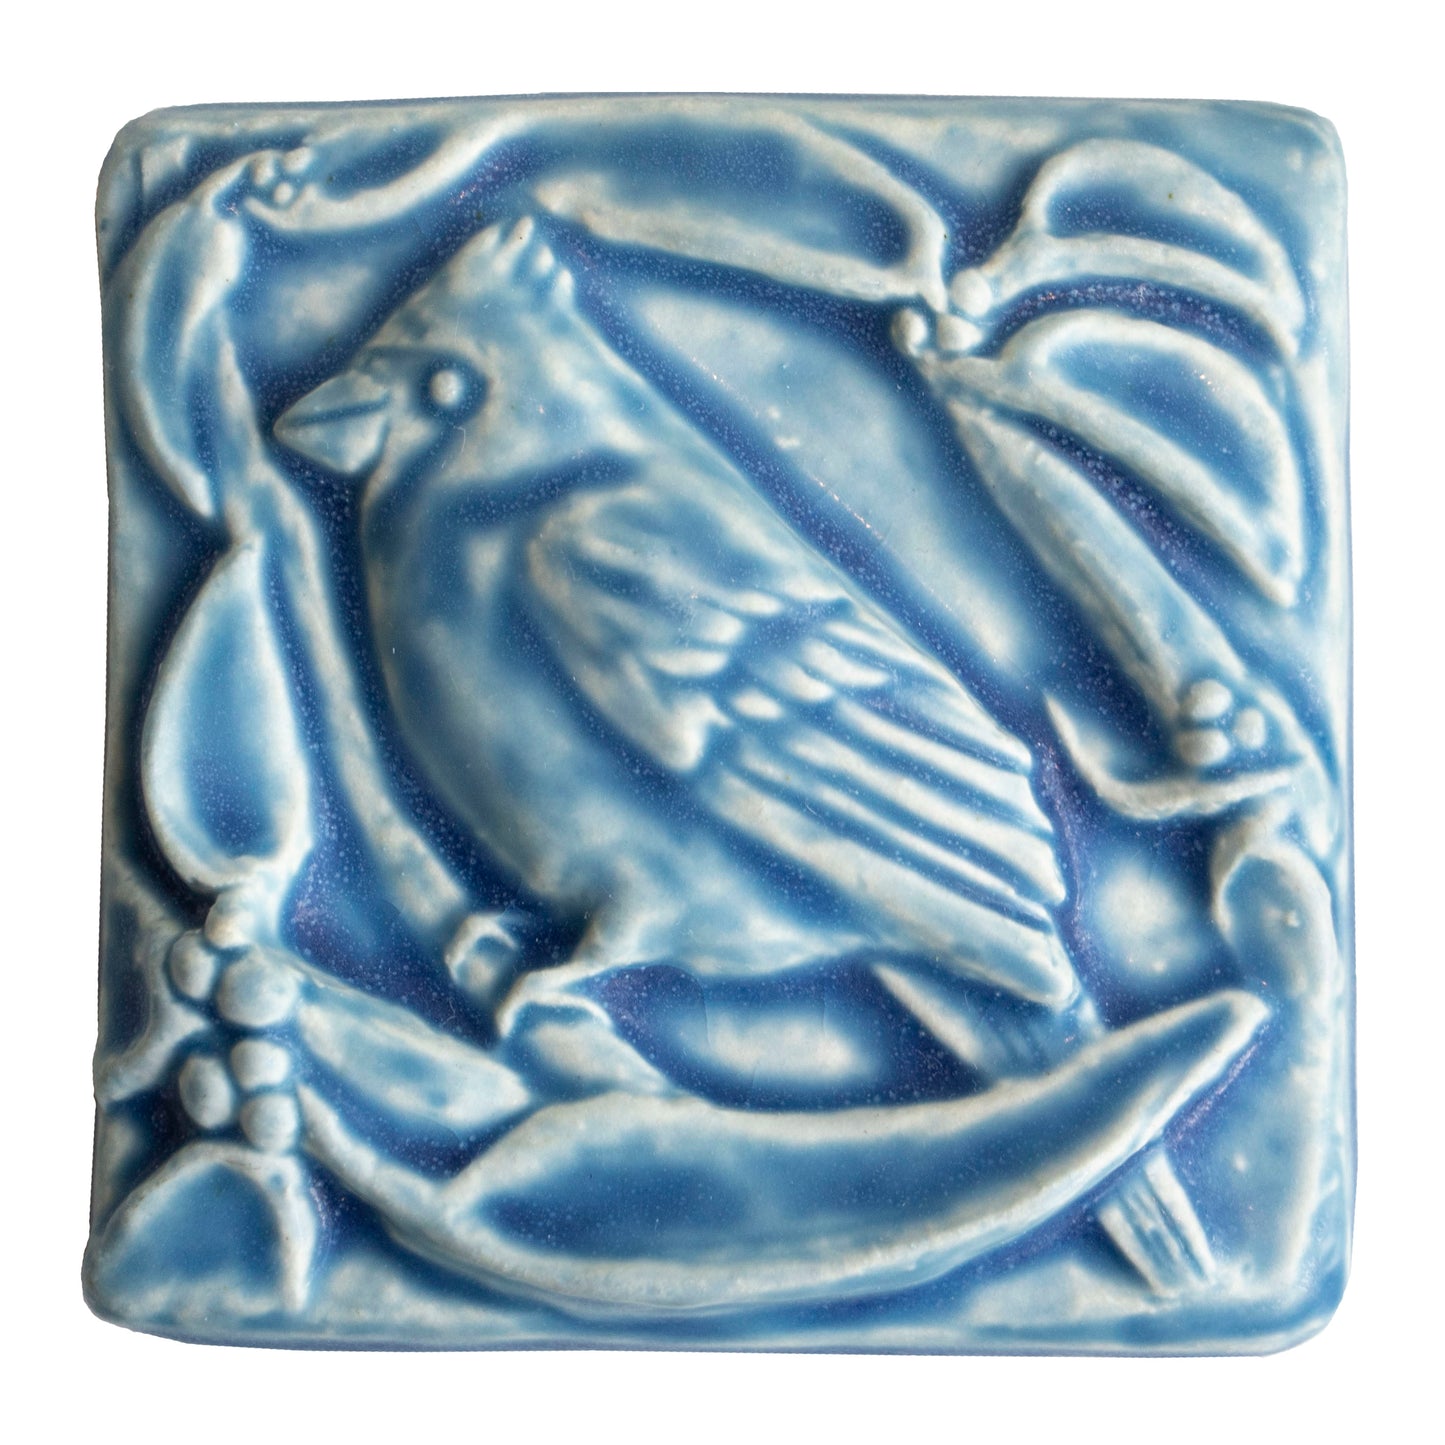 cardinal bird whistling frog ceramic art tile